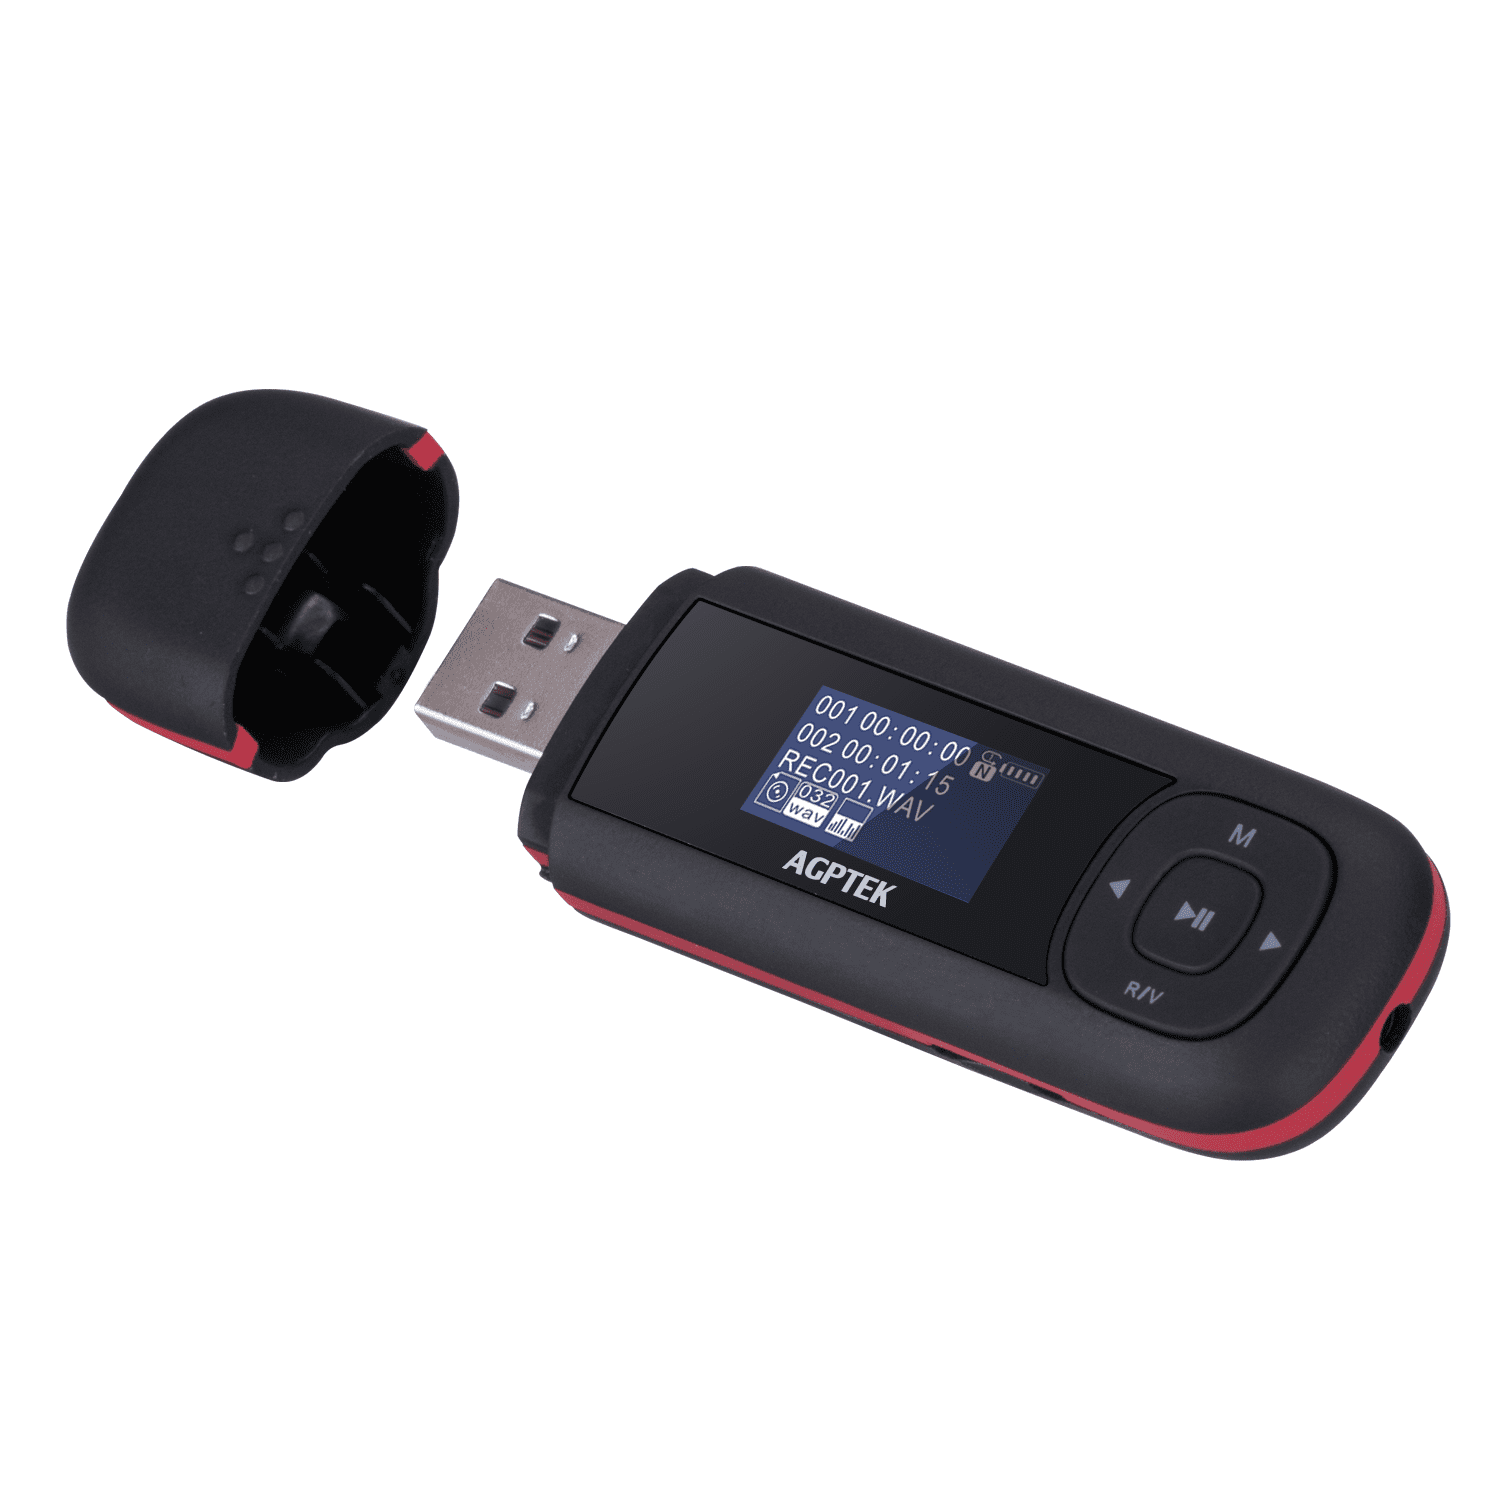 AGPTEK 8GB MP3 Player, Music Player with FM Radio, USB Drive, Recording